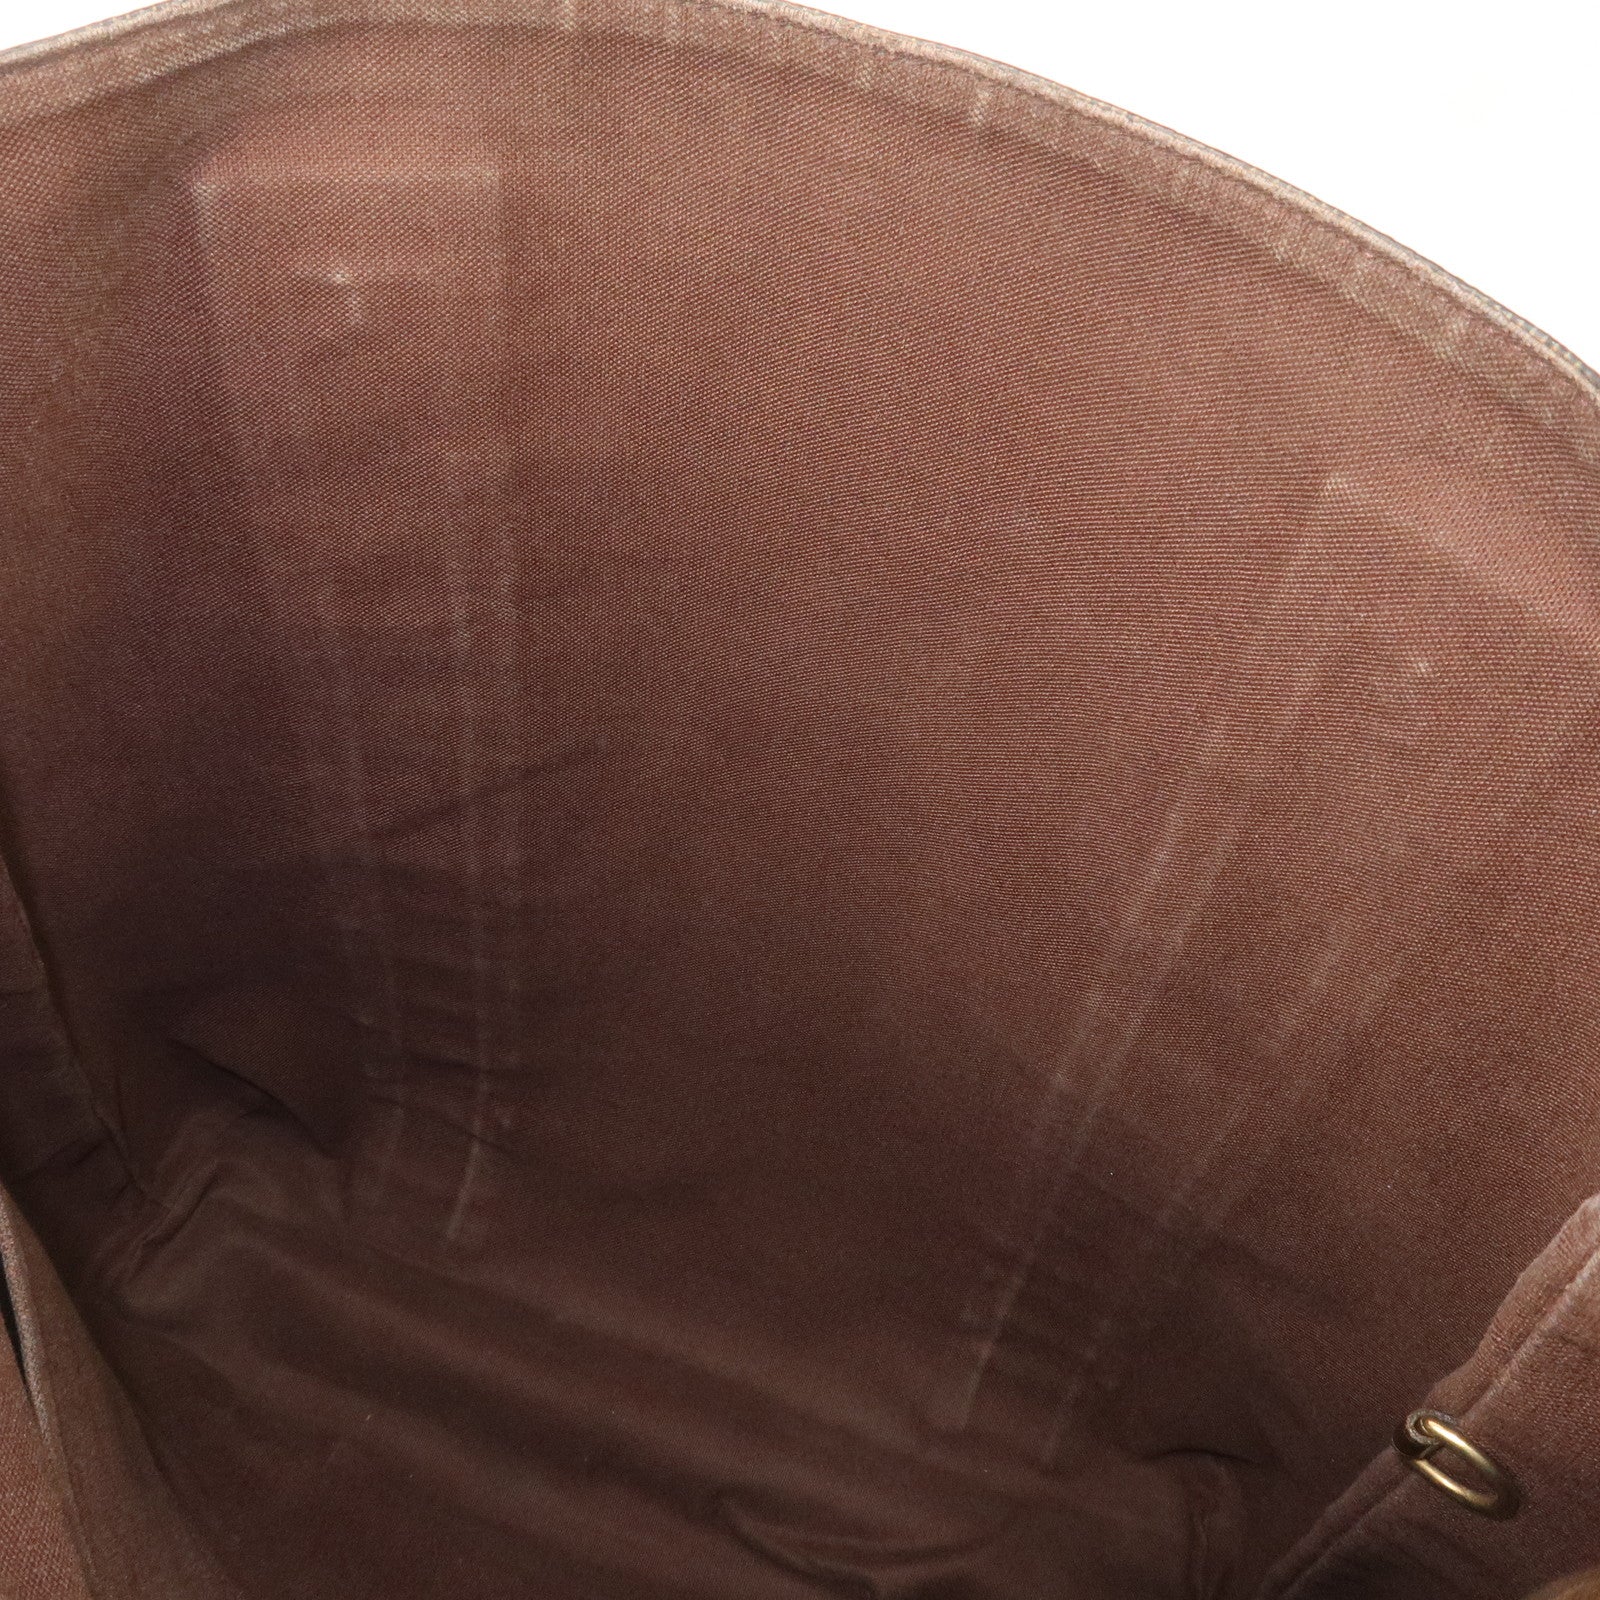 LV Bag Insert Lv Palermo Gm Insert for Louis Vuitton Bag -  Canada